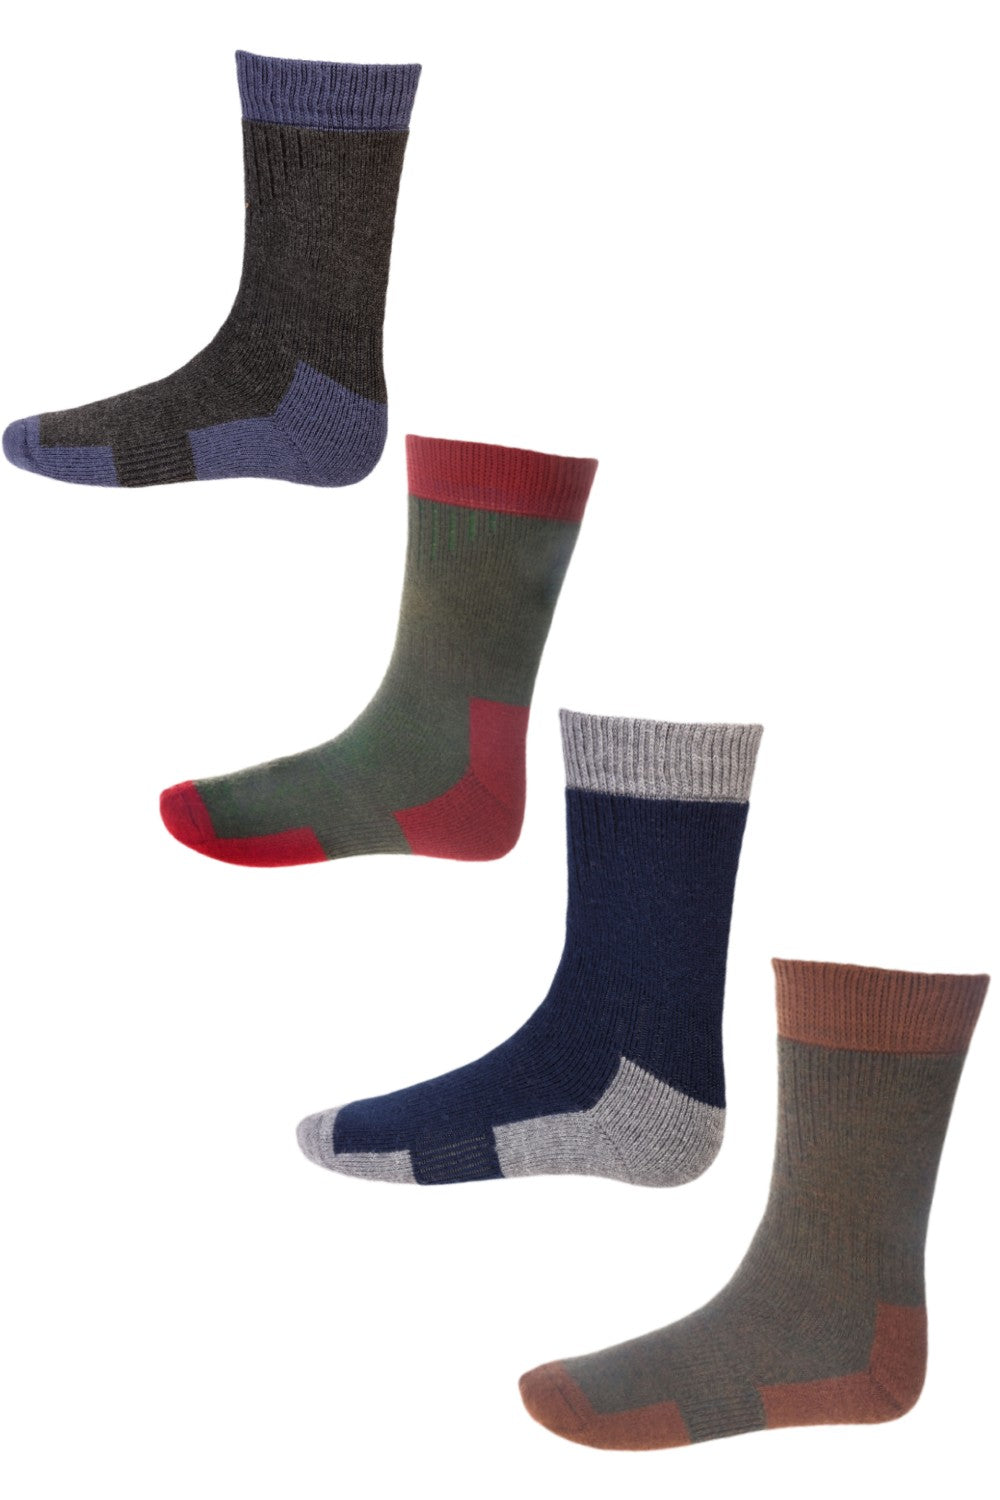 House of Cheviot Glen Technical Socks In Charcoal/St Andrews Blue, Spruce/Brick Red, Navy/Mid Grey, Bracken  